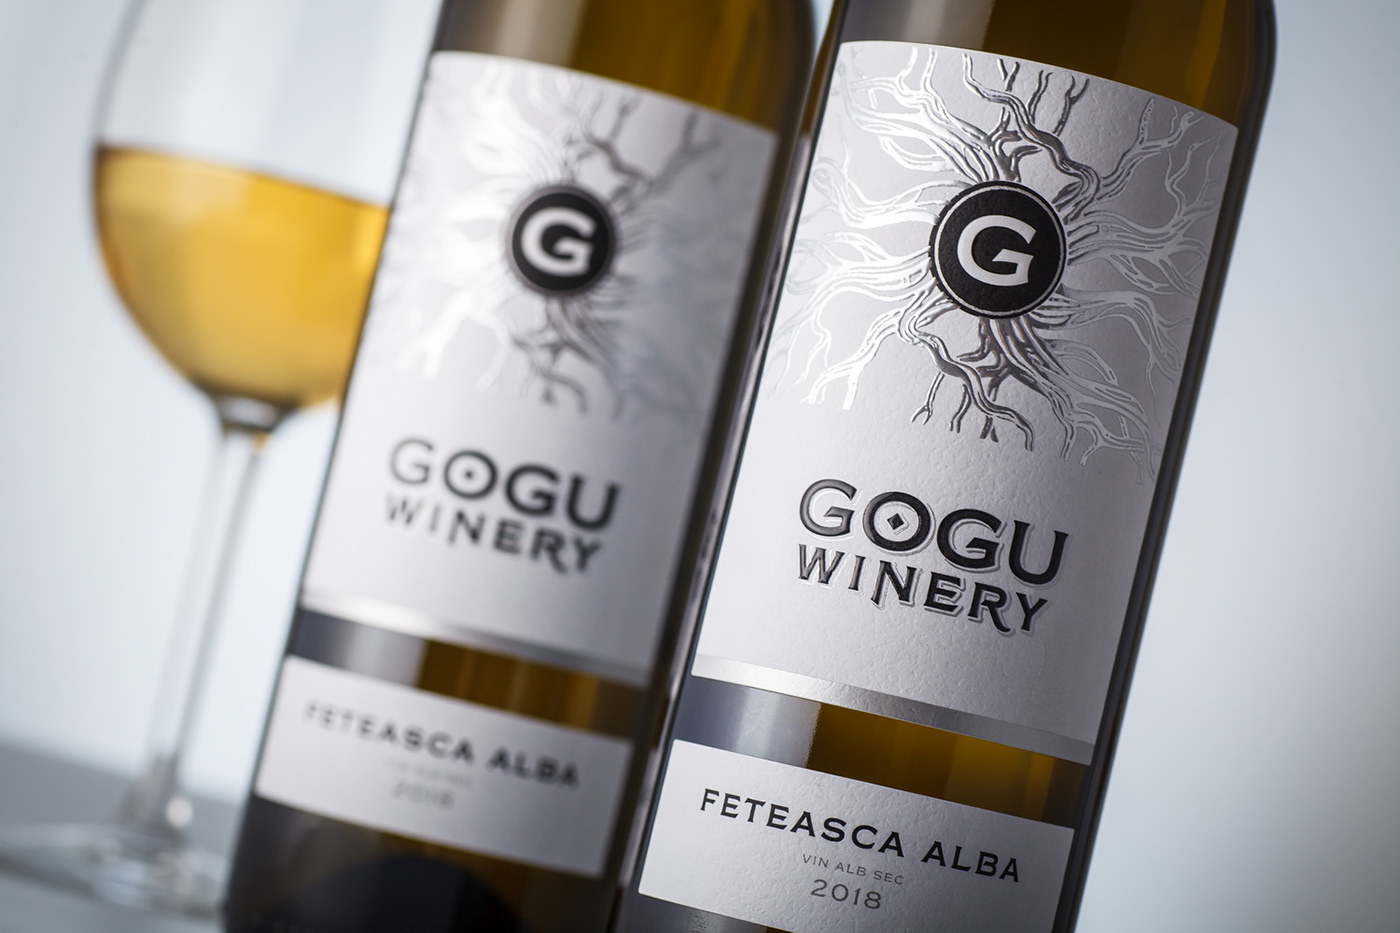 43oz design studio Moldova gogu winery feteasca alba wine label Packaging label design White